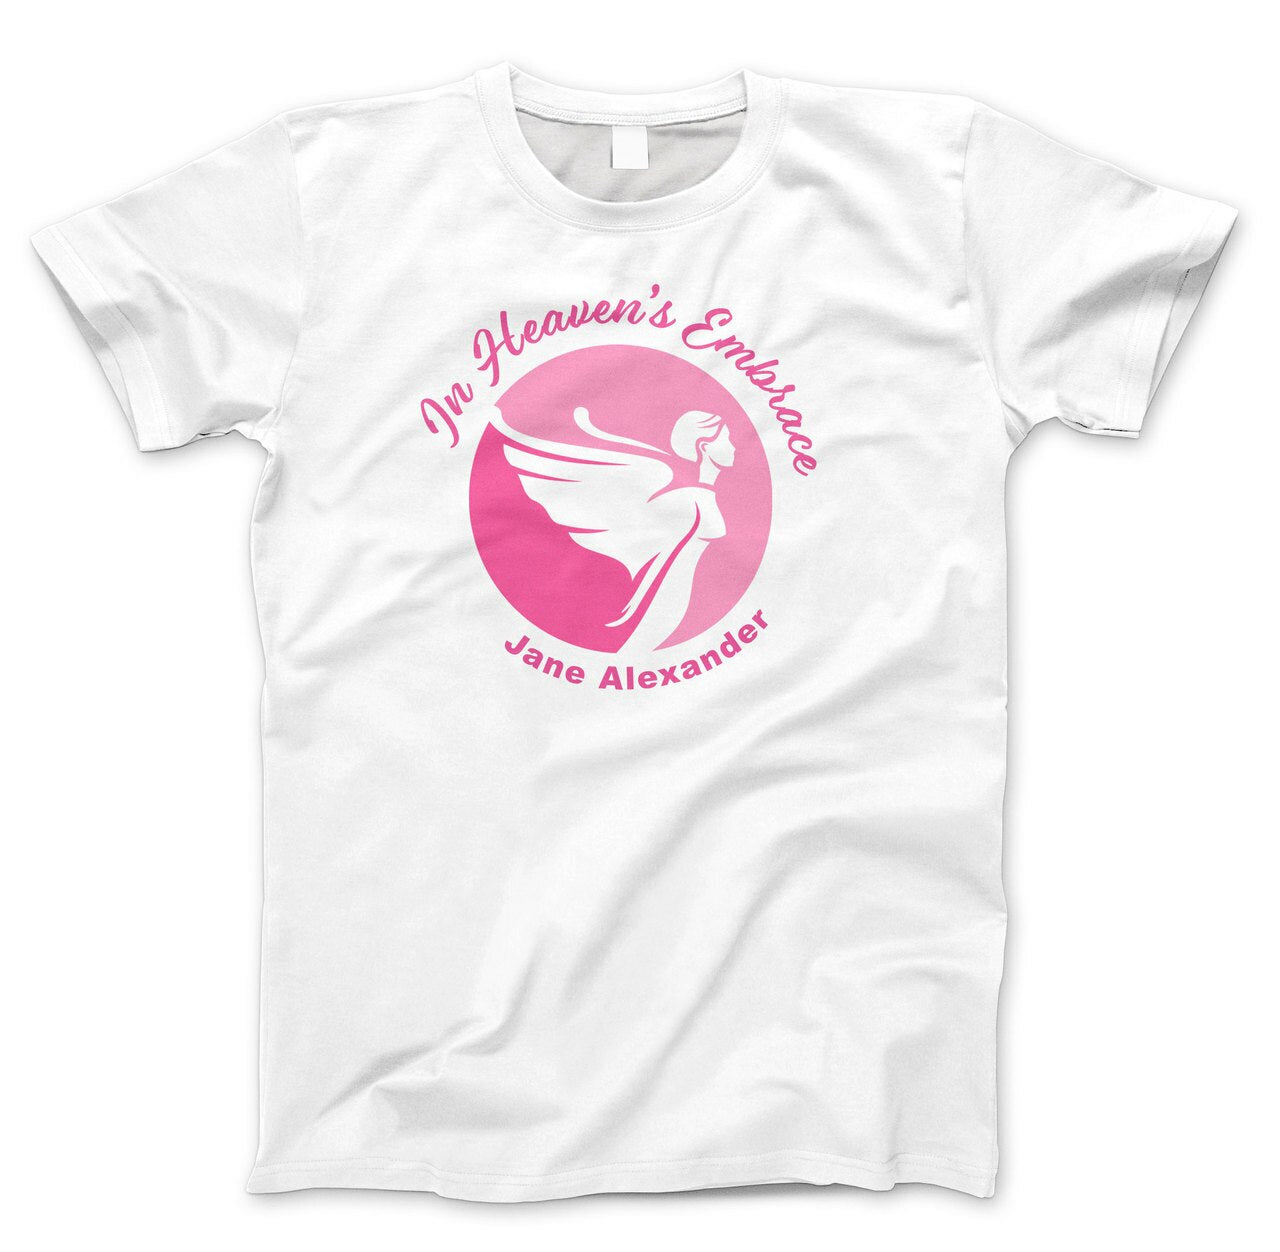 Heaven's Embrace In Loving Memory T-Shirt (Ladies).